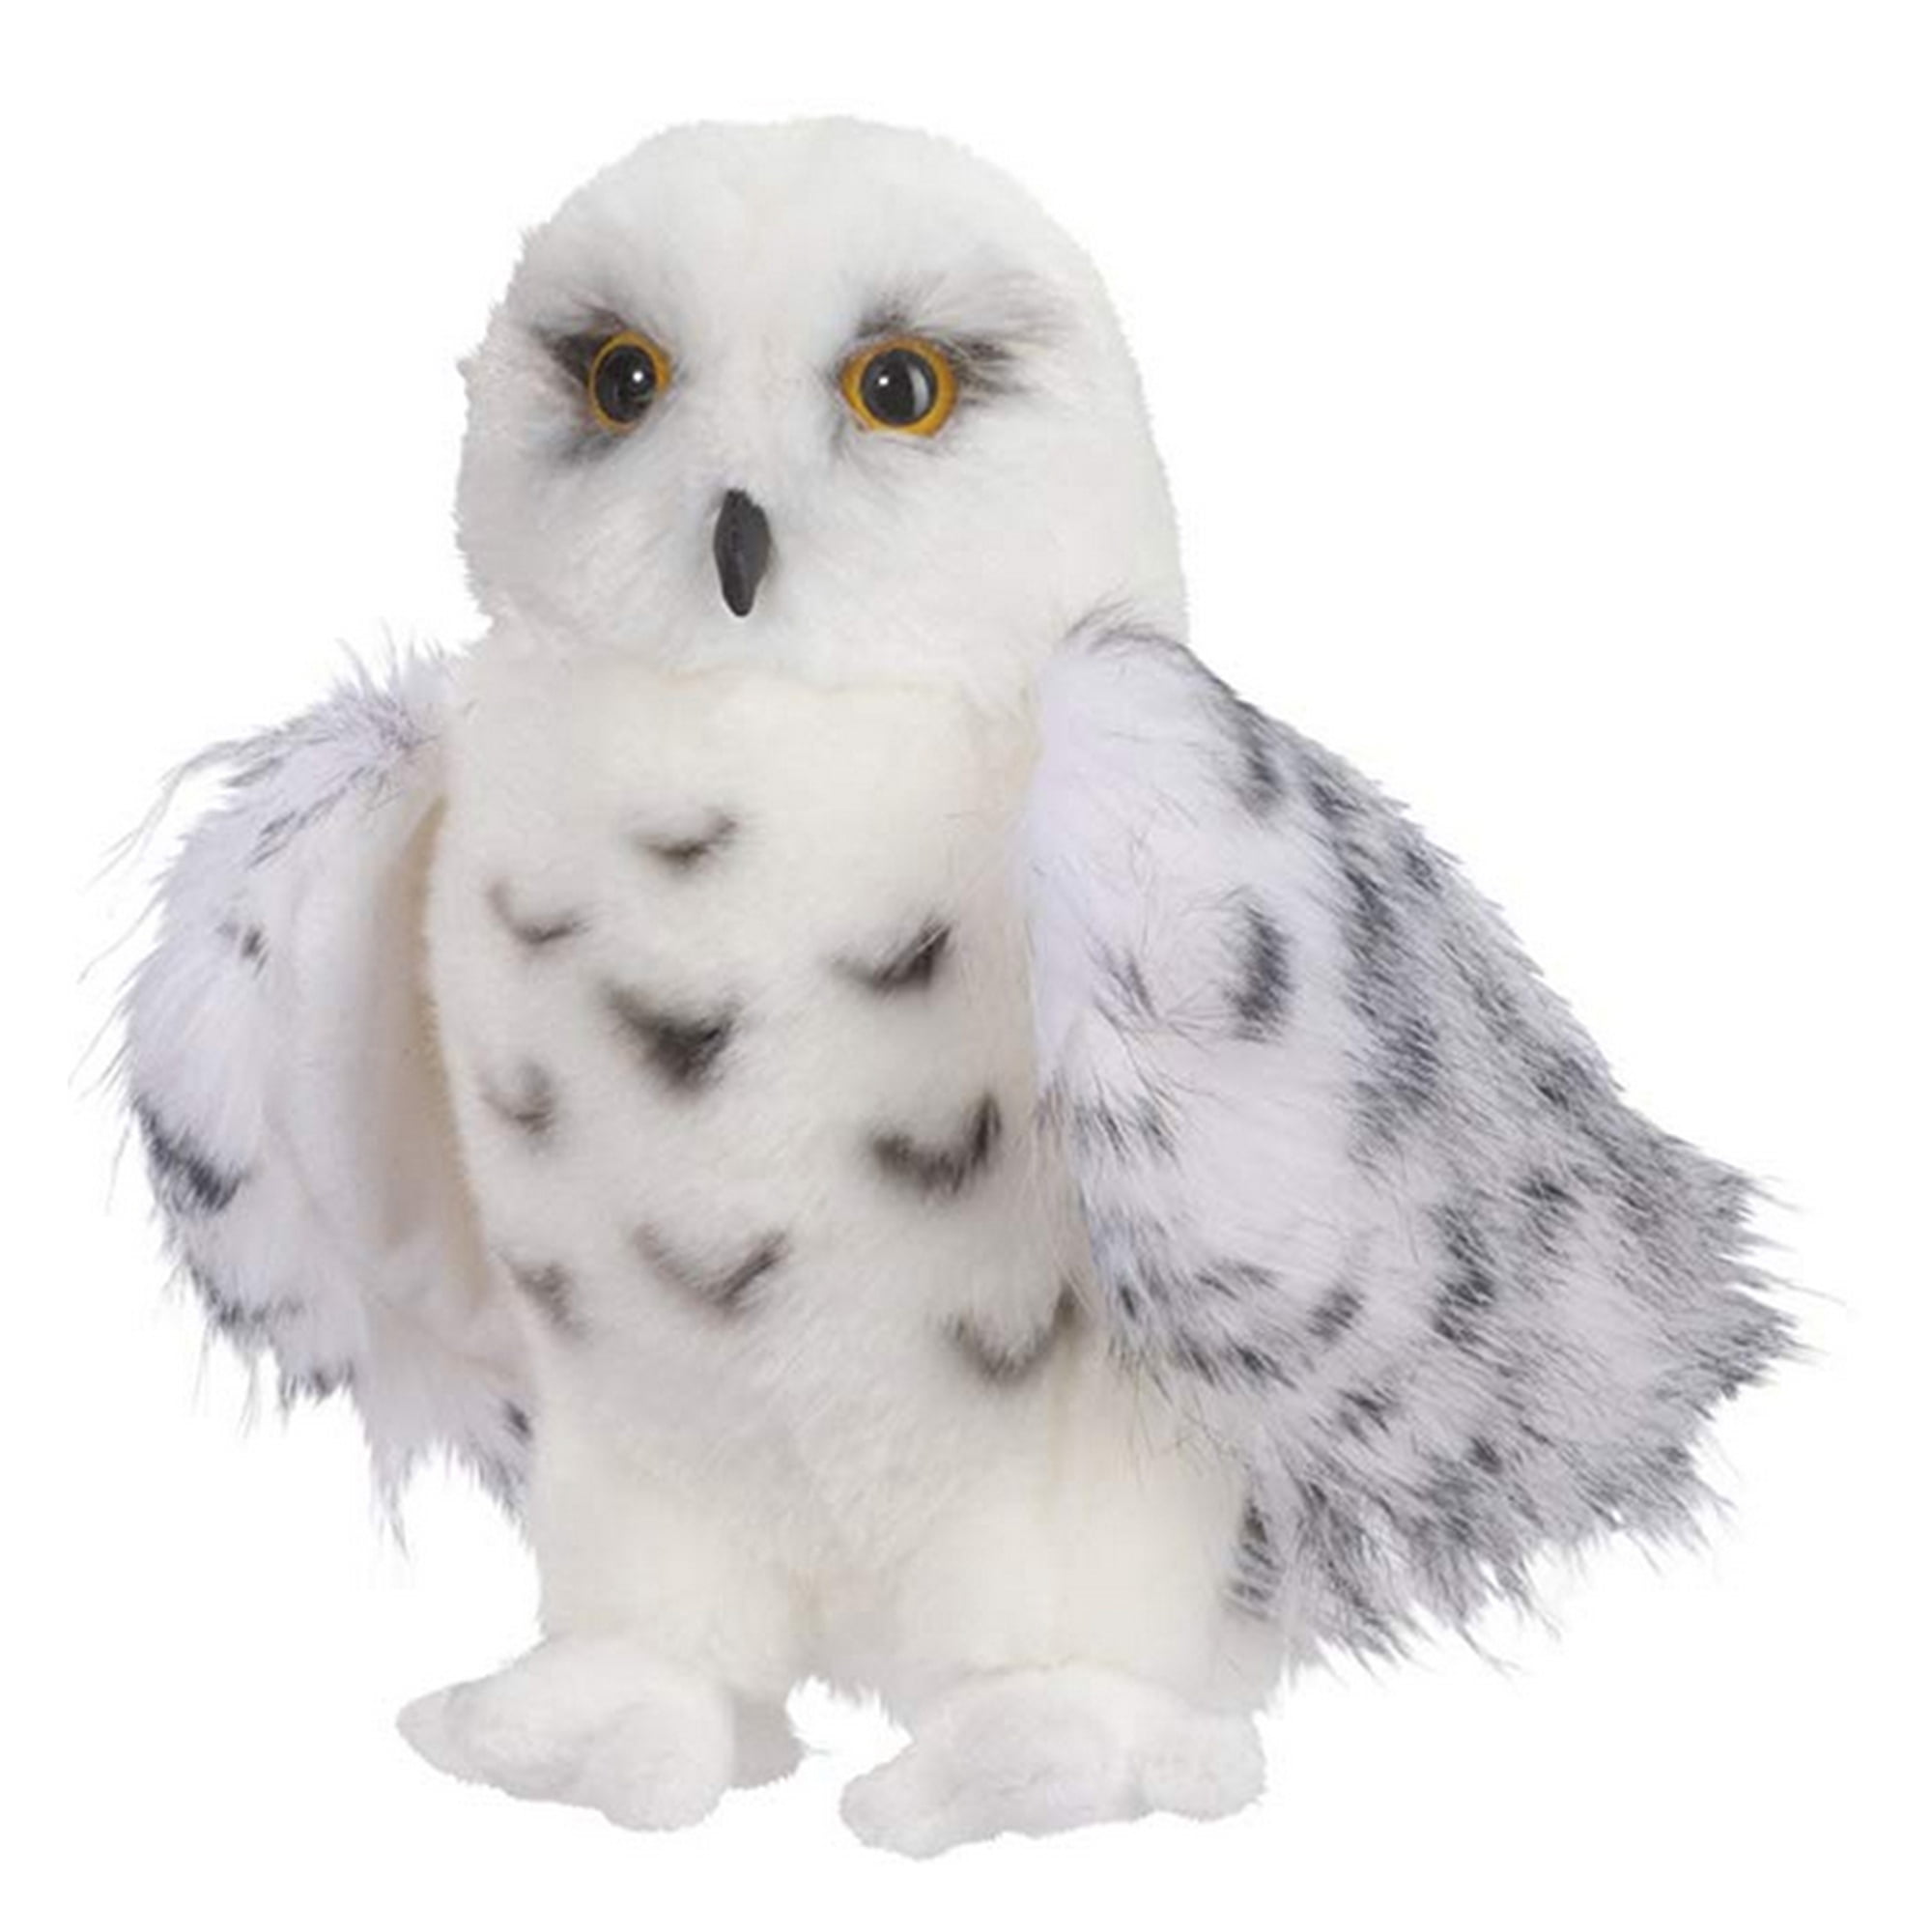 Snow Owl Toy Figure Kids Toddler Pretend Play Bird Animal Boy Girl Gift New 